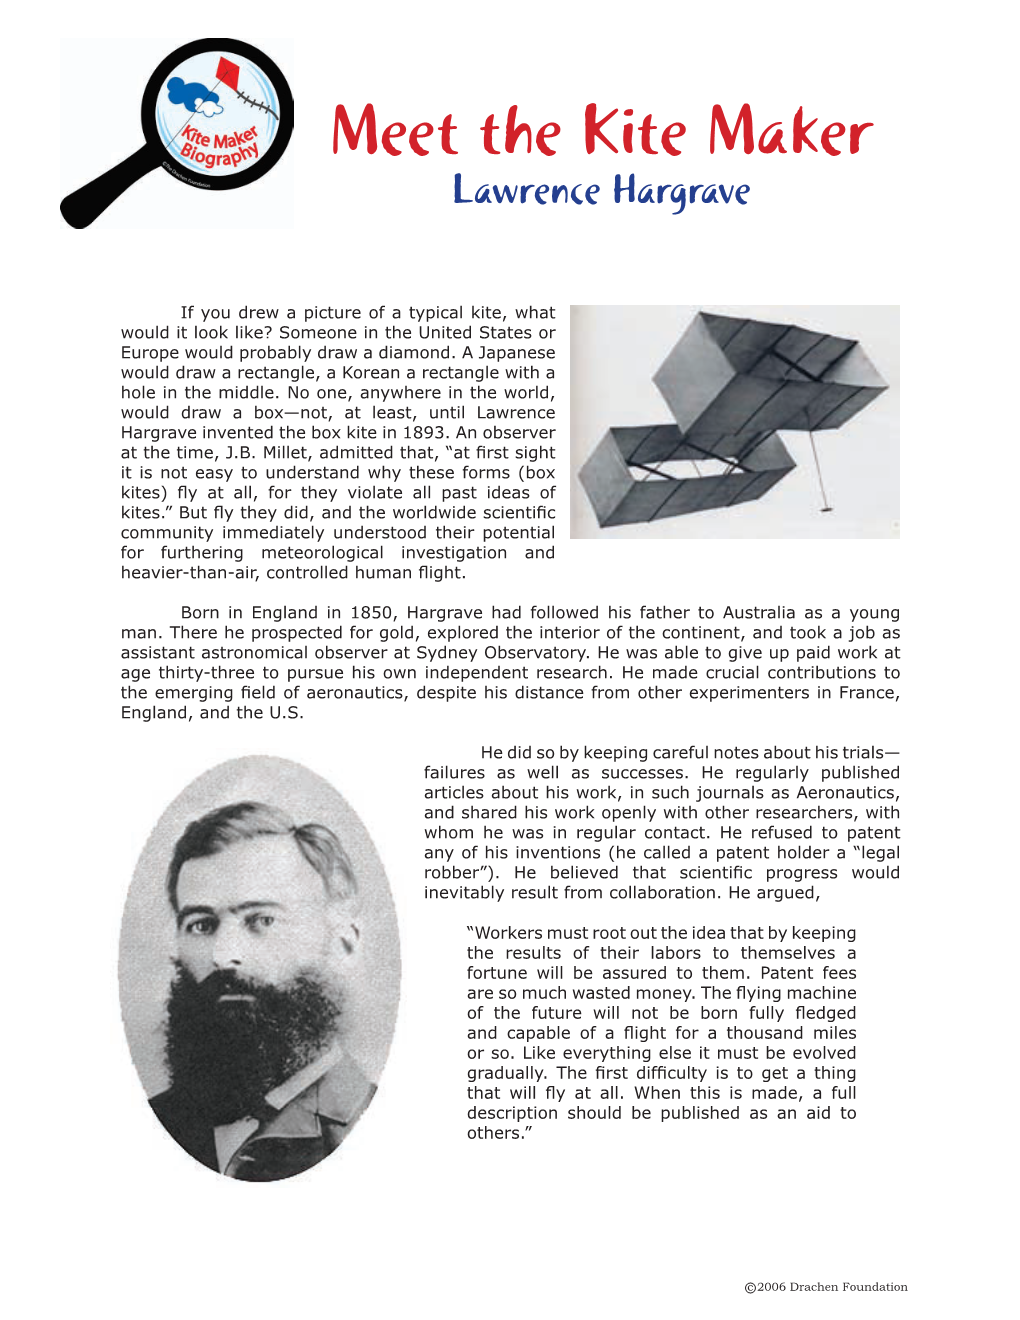 Meet the Kite Maker: Lawrence Hargrave